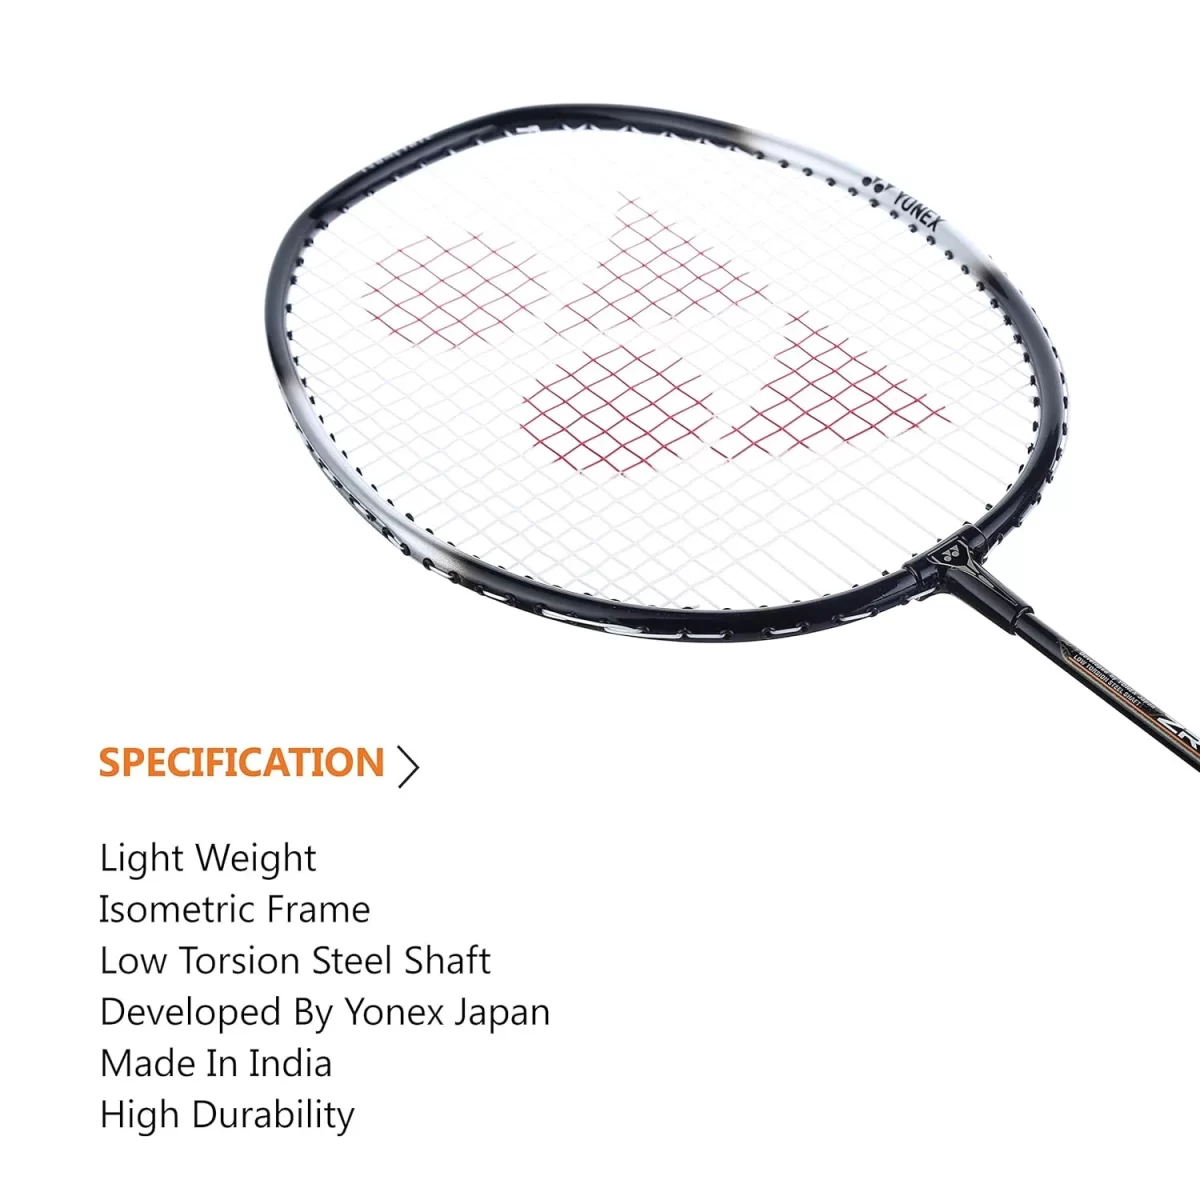 Top 5 Yonex Badminton Rackets in India - Yonex ZR 100 Lite Black